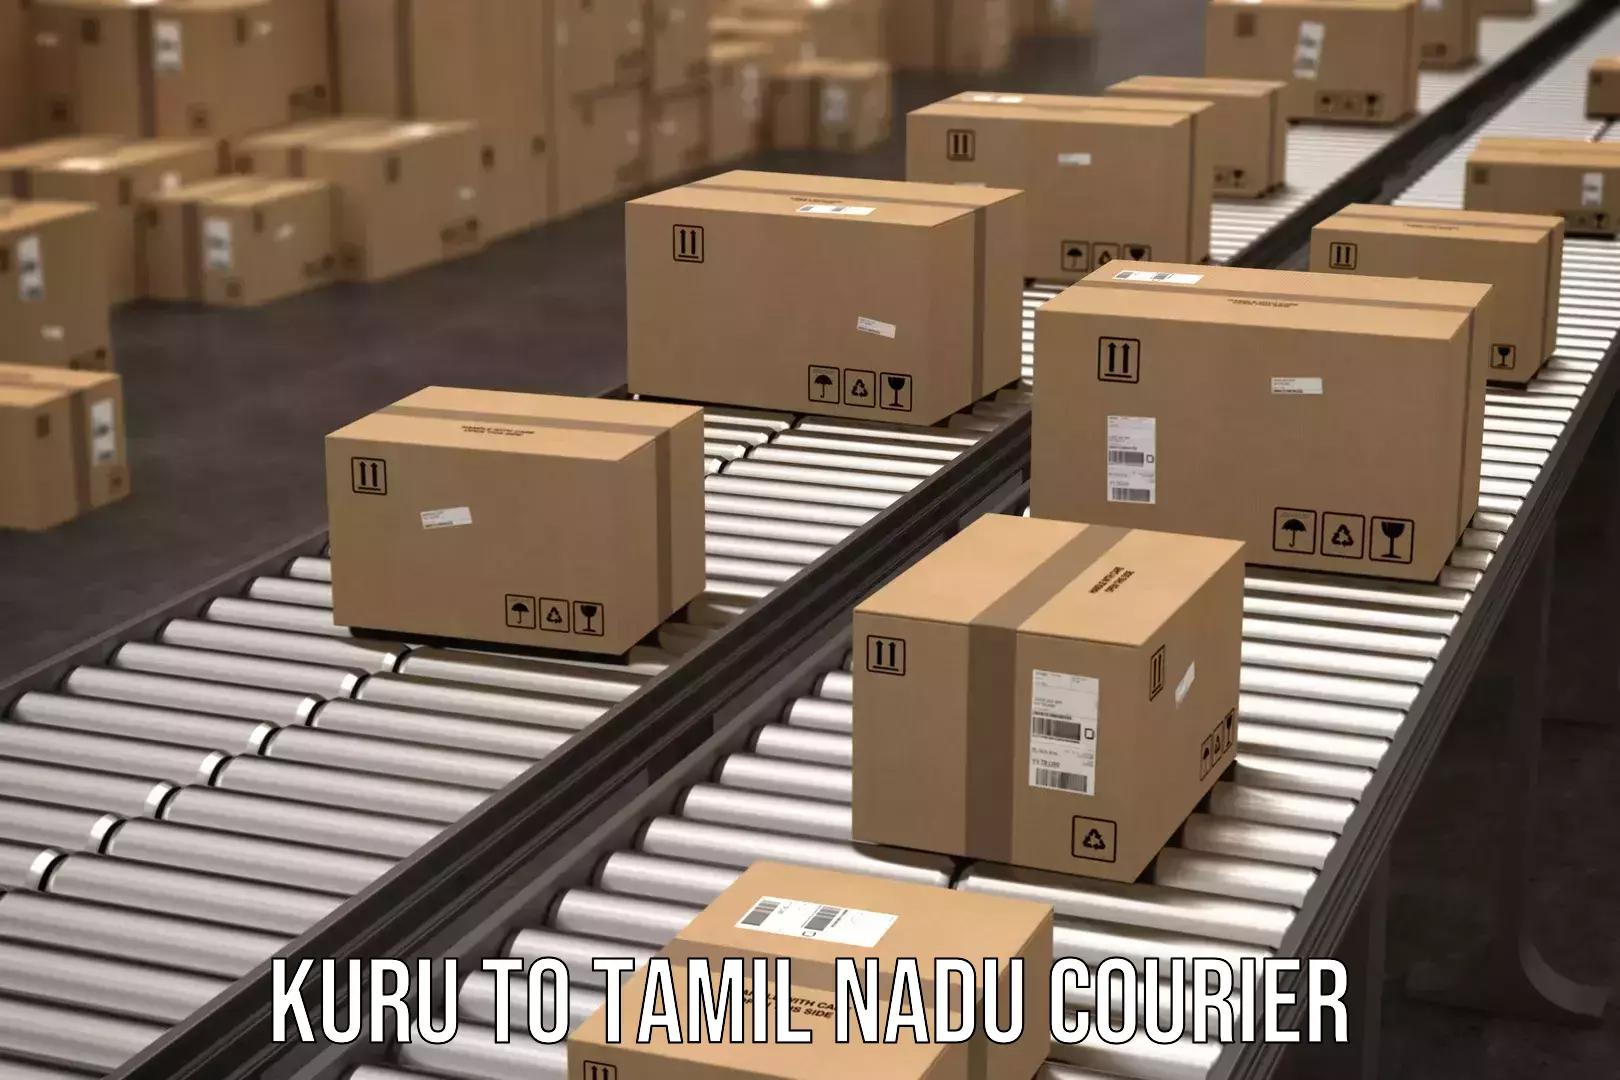 Weekend courier service Kuru to Tamil Nadu